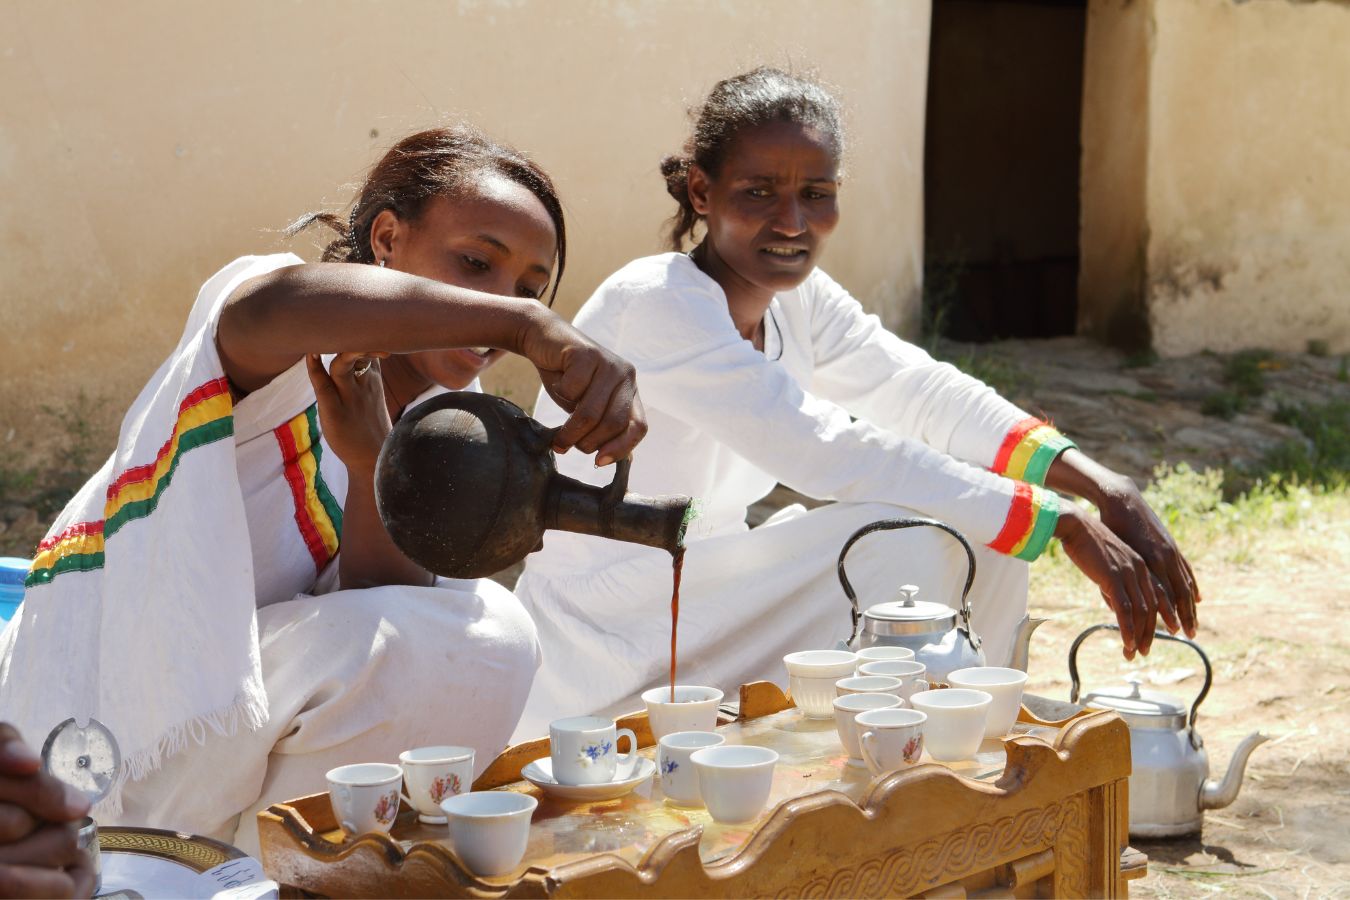 Coffee in Ethiopia: